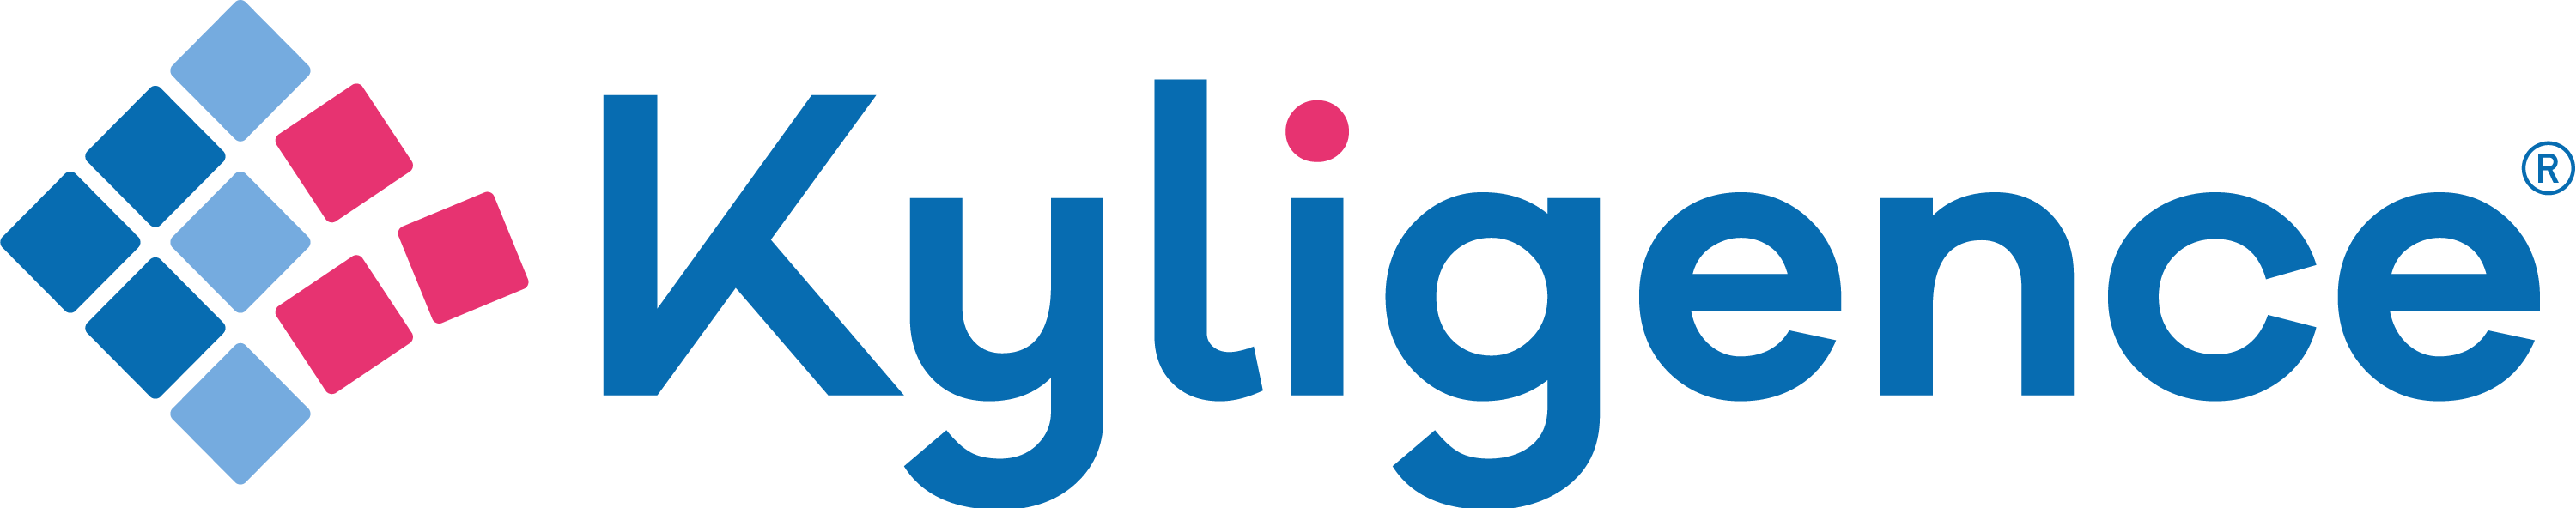 Kyligence logo